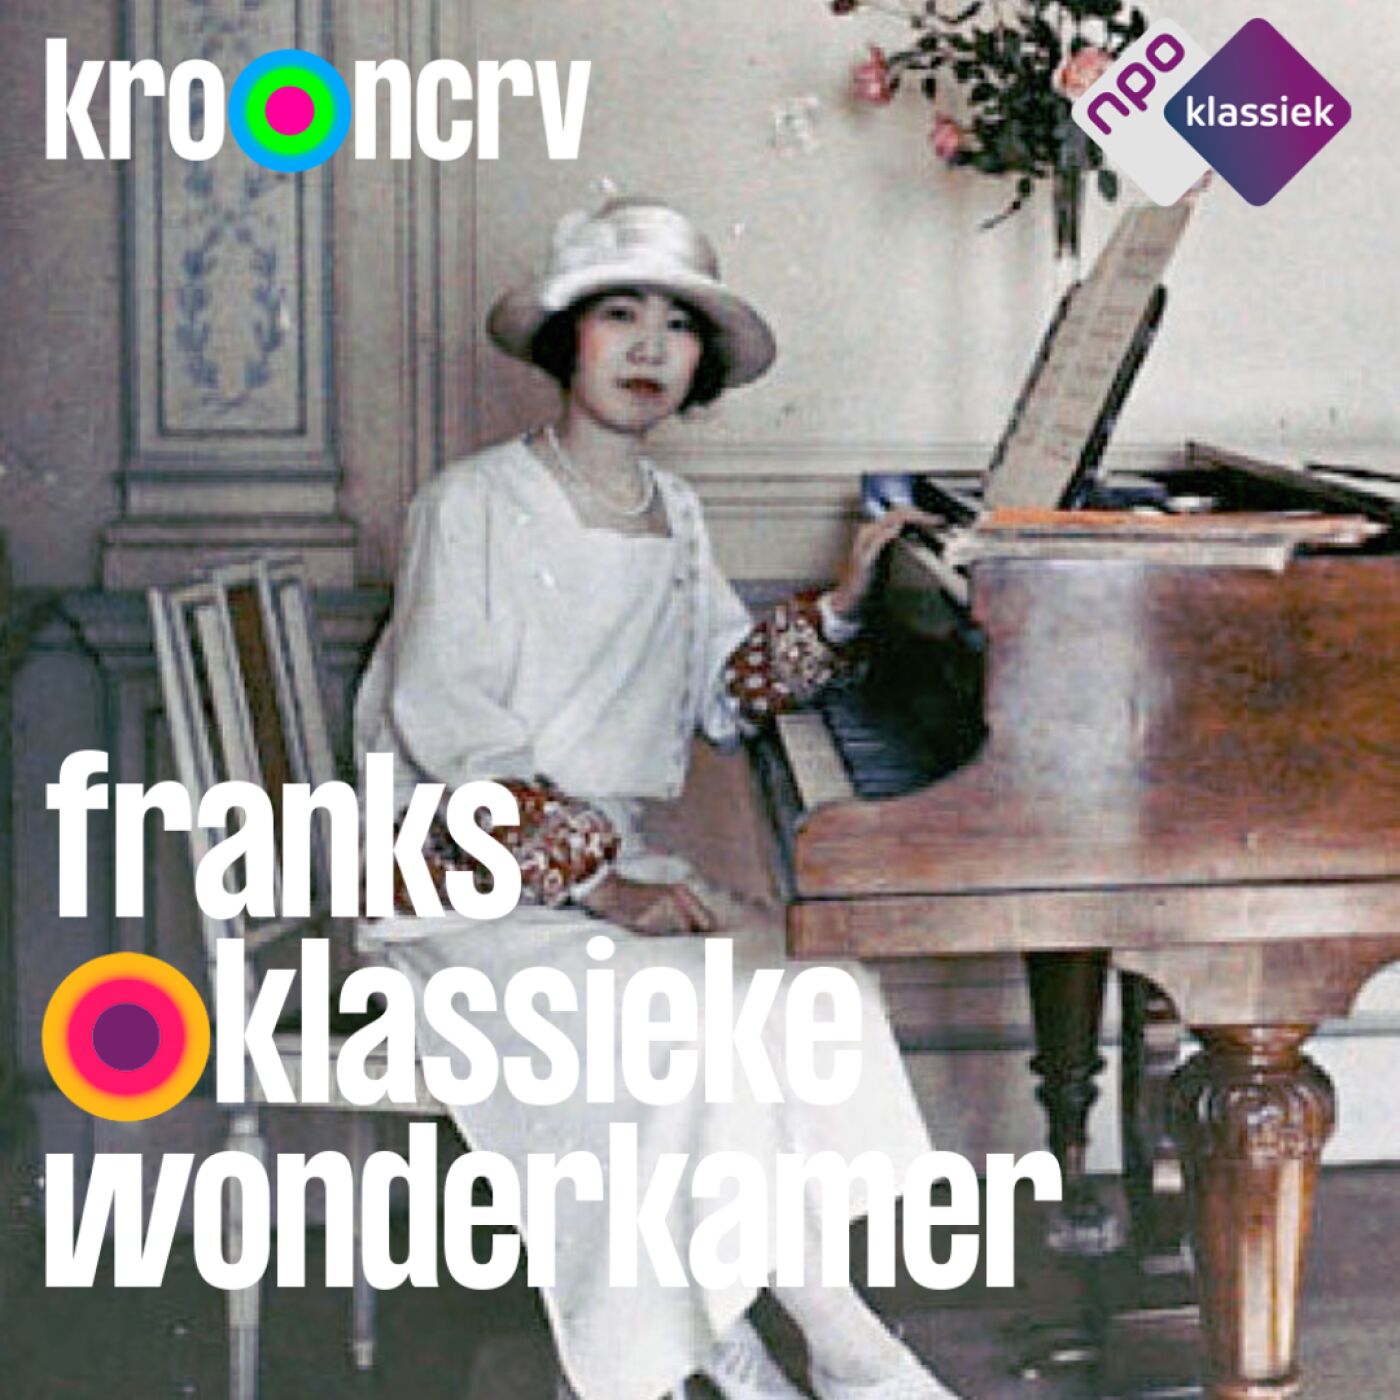 #110 - Franks Klassieke Wonderkamer - ‘Een stille regen’